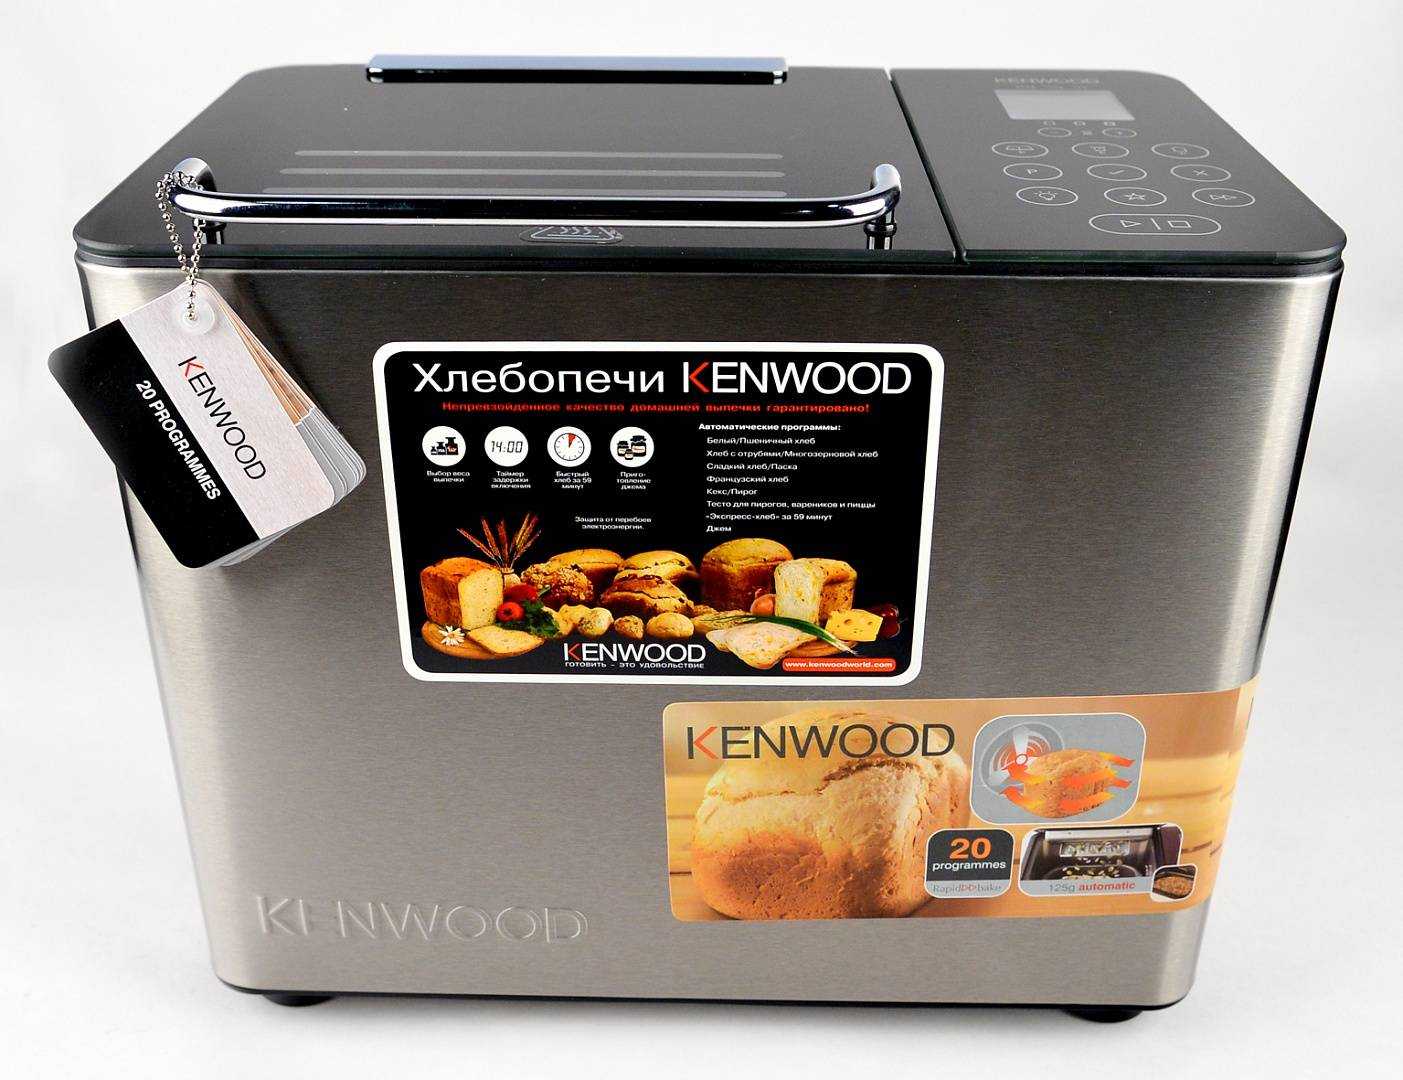 Описание и технические характеристики хлебопечки kenwood bm-450 - хлебопечка.ру